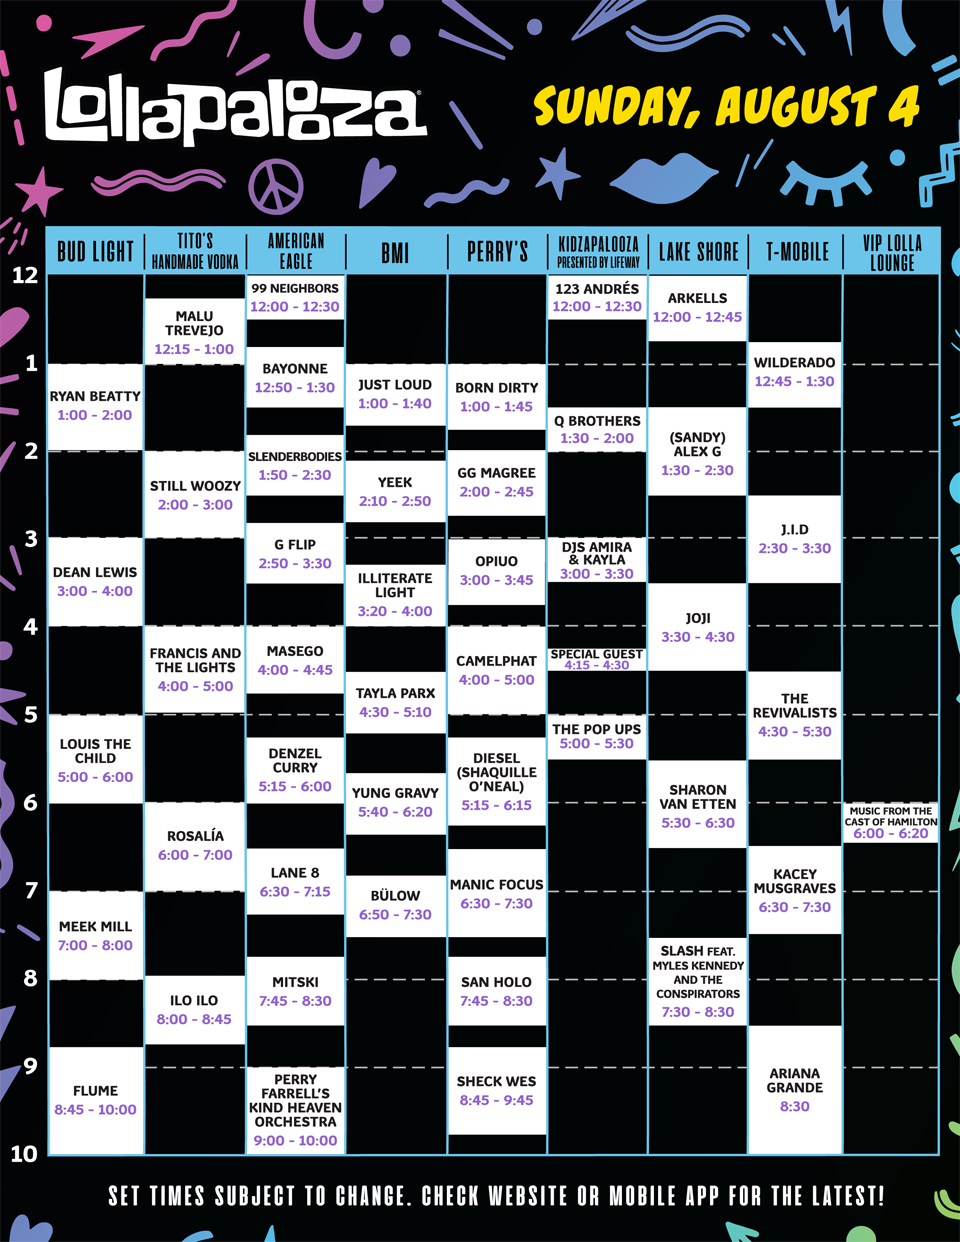 Lollapalooza 2019 schedule